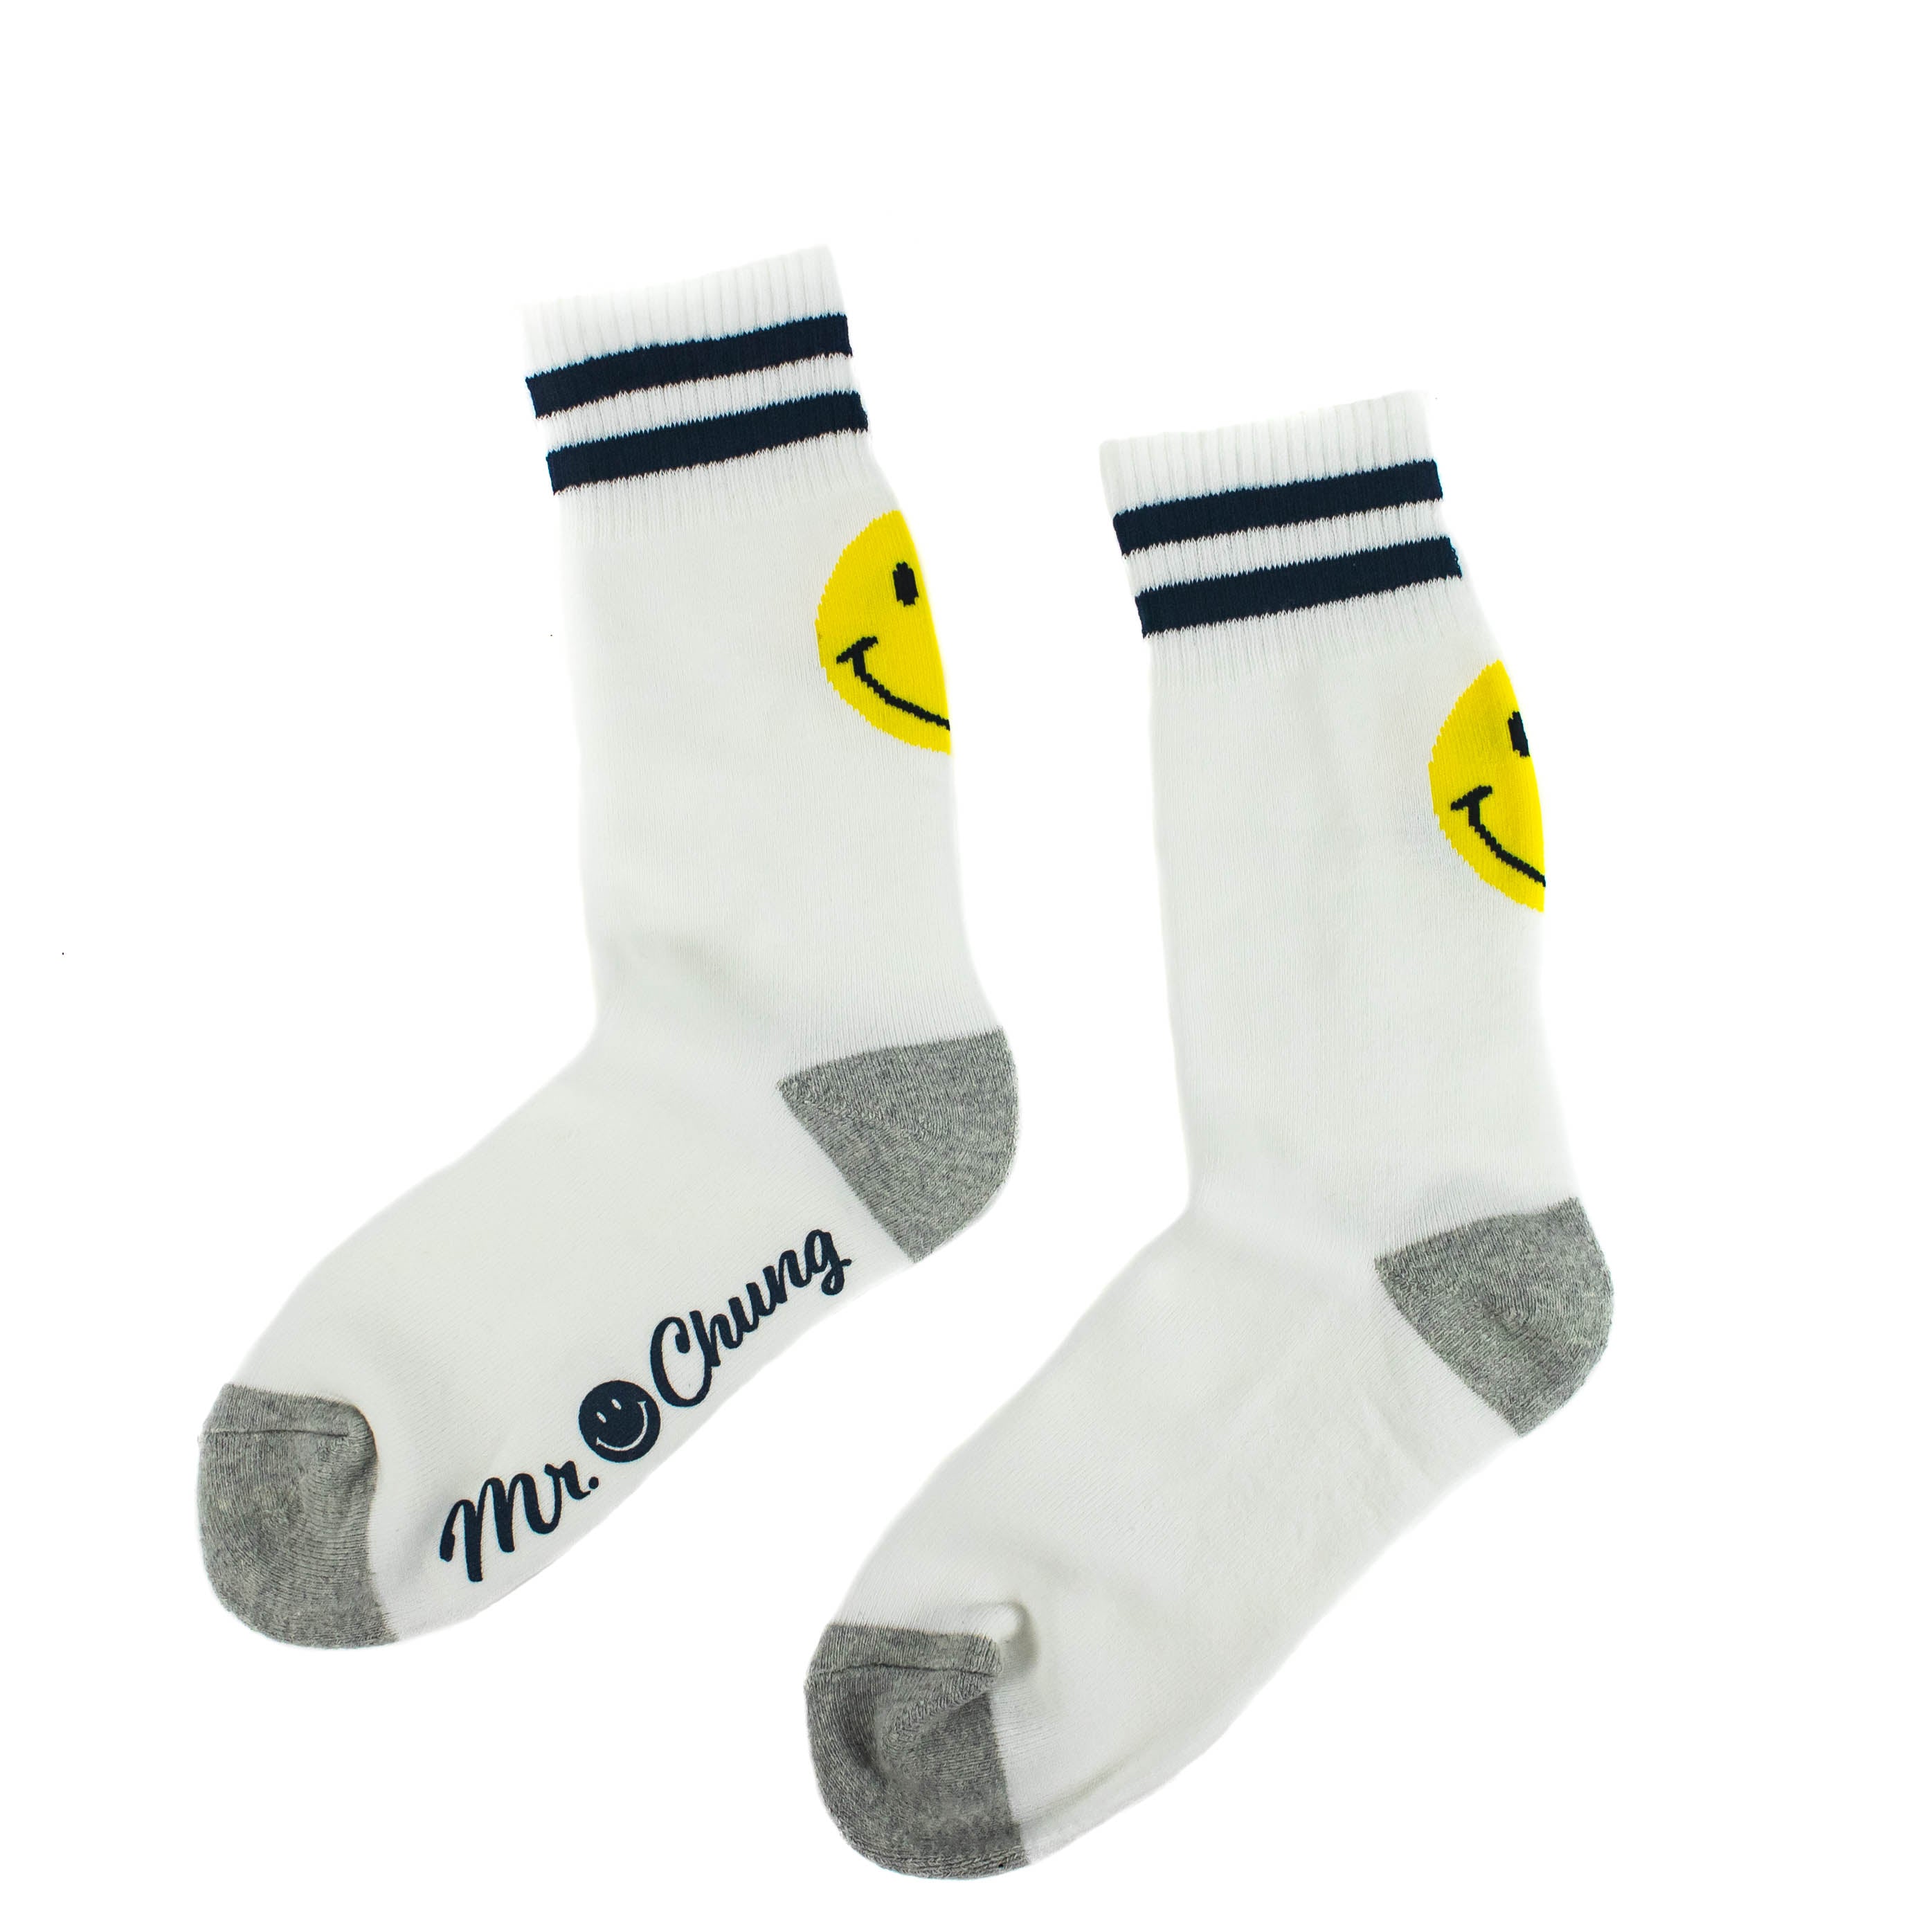 Happy National Sticky Sock Day! Enjoy 10% off all socks all day